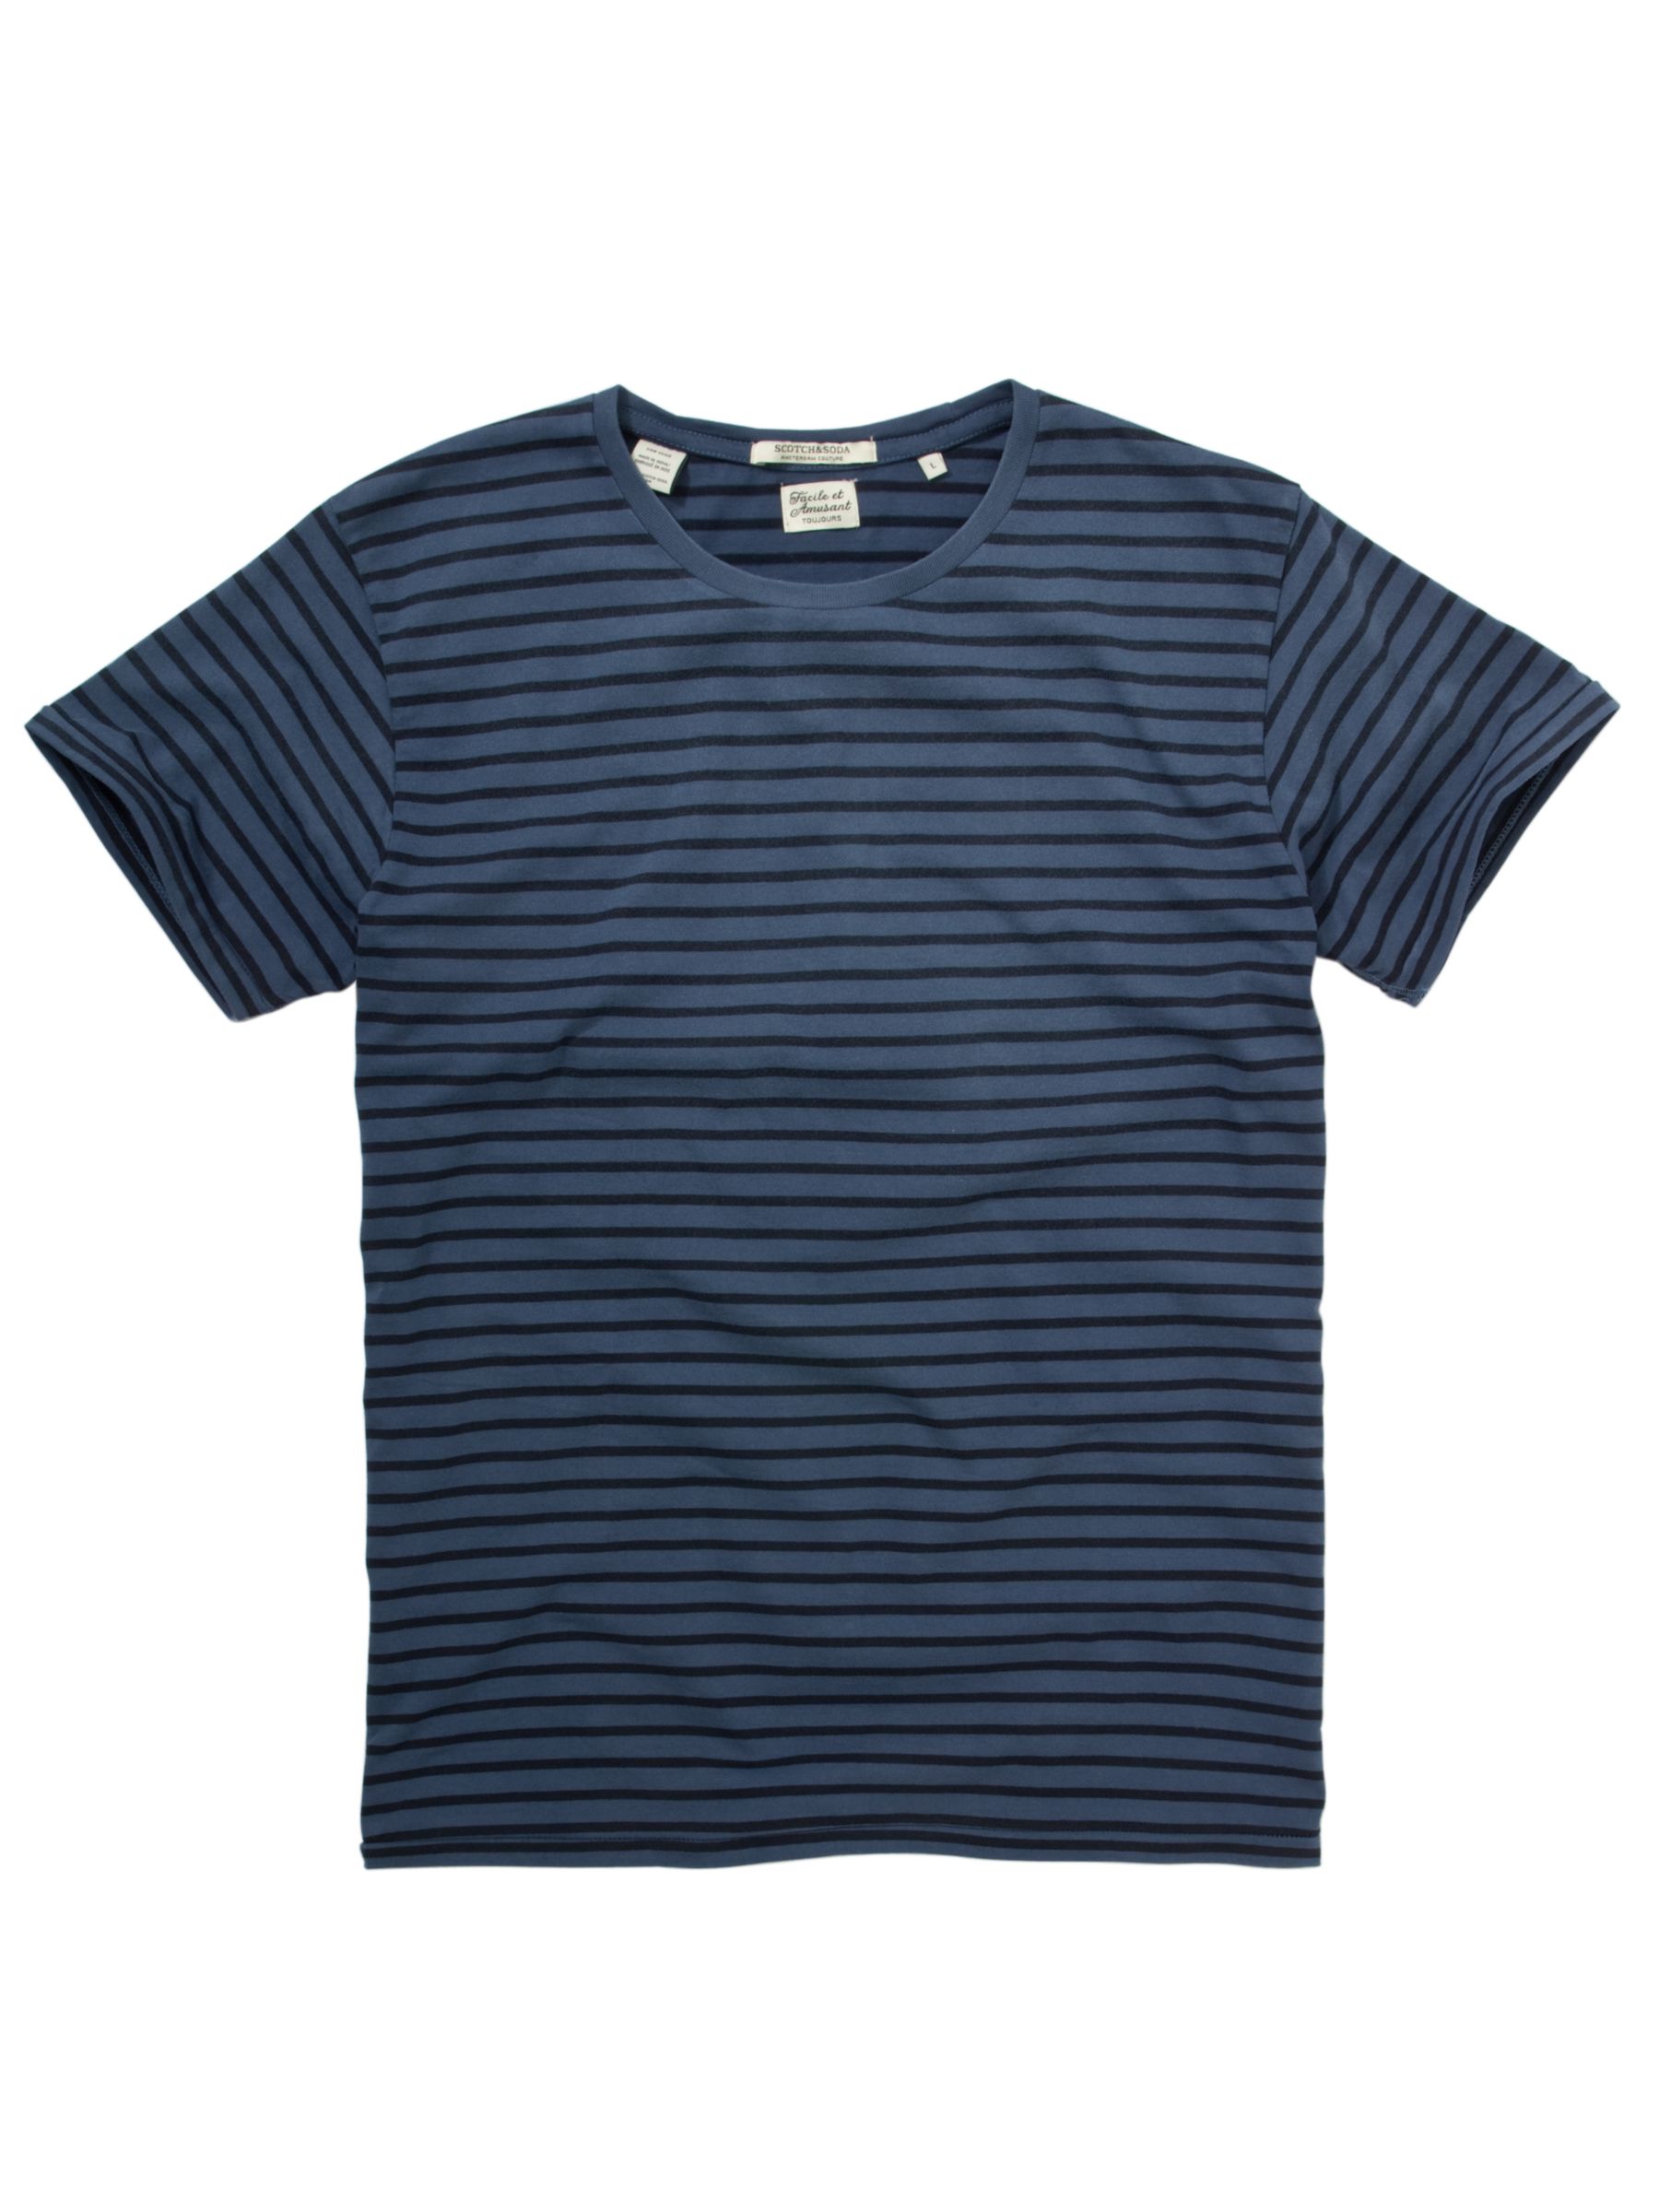 Scotch and Soda Fine Stripe T-Shirt, Blue/navy